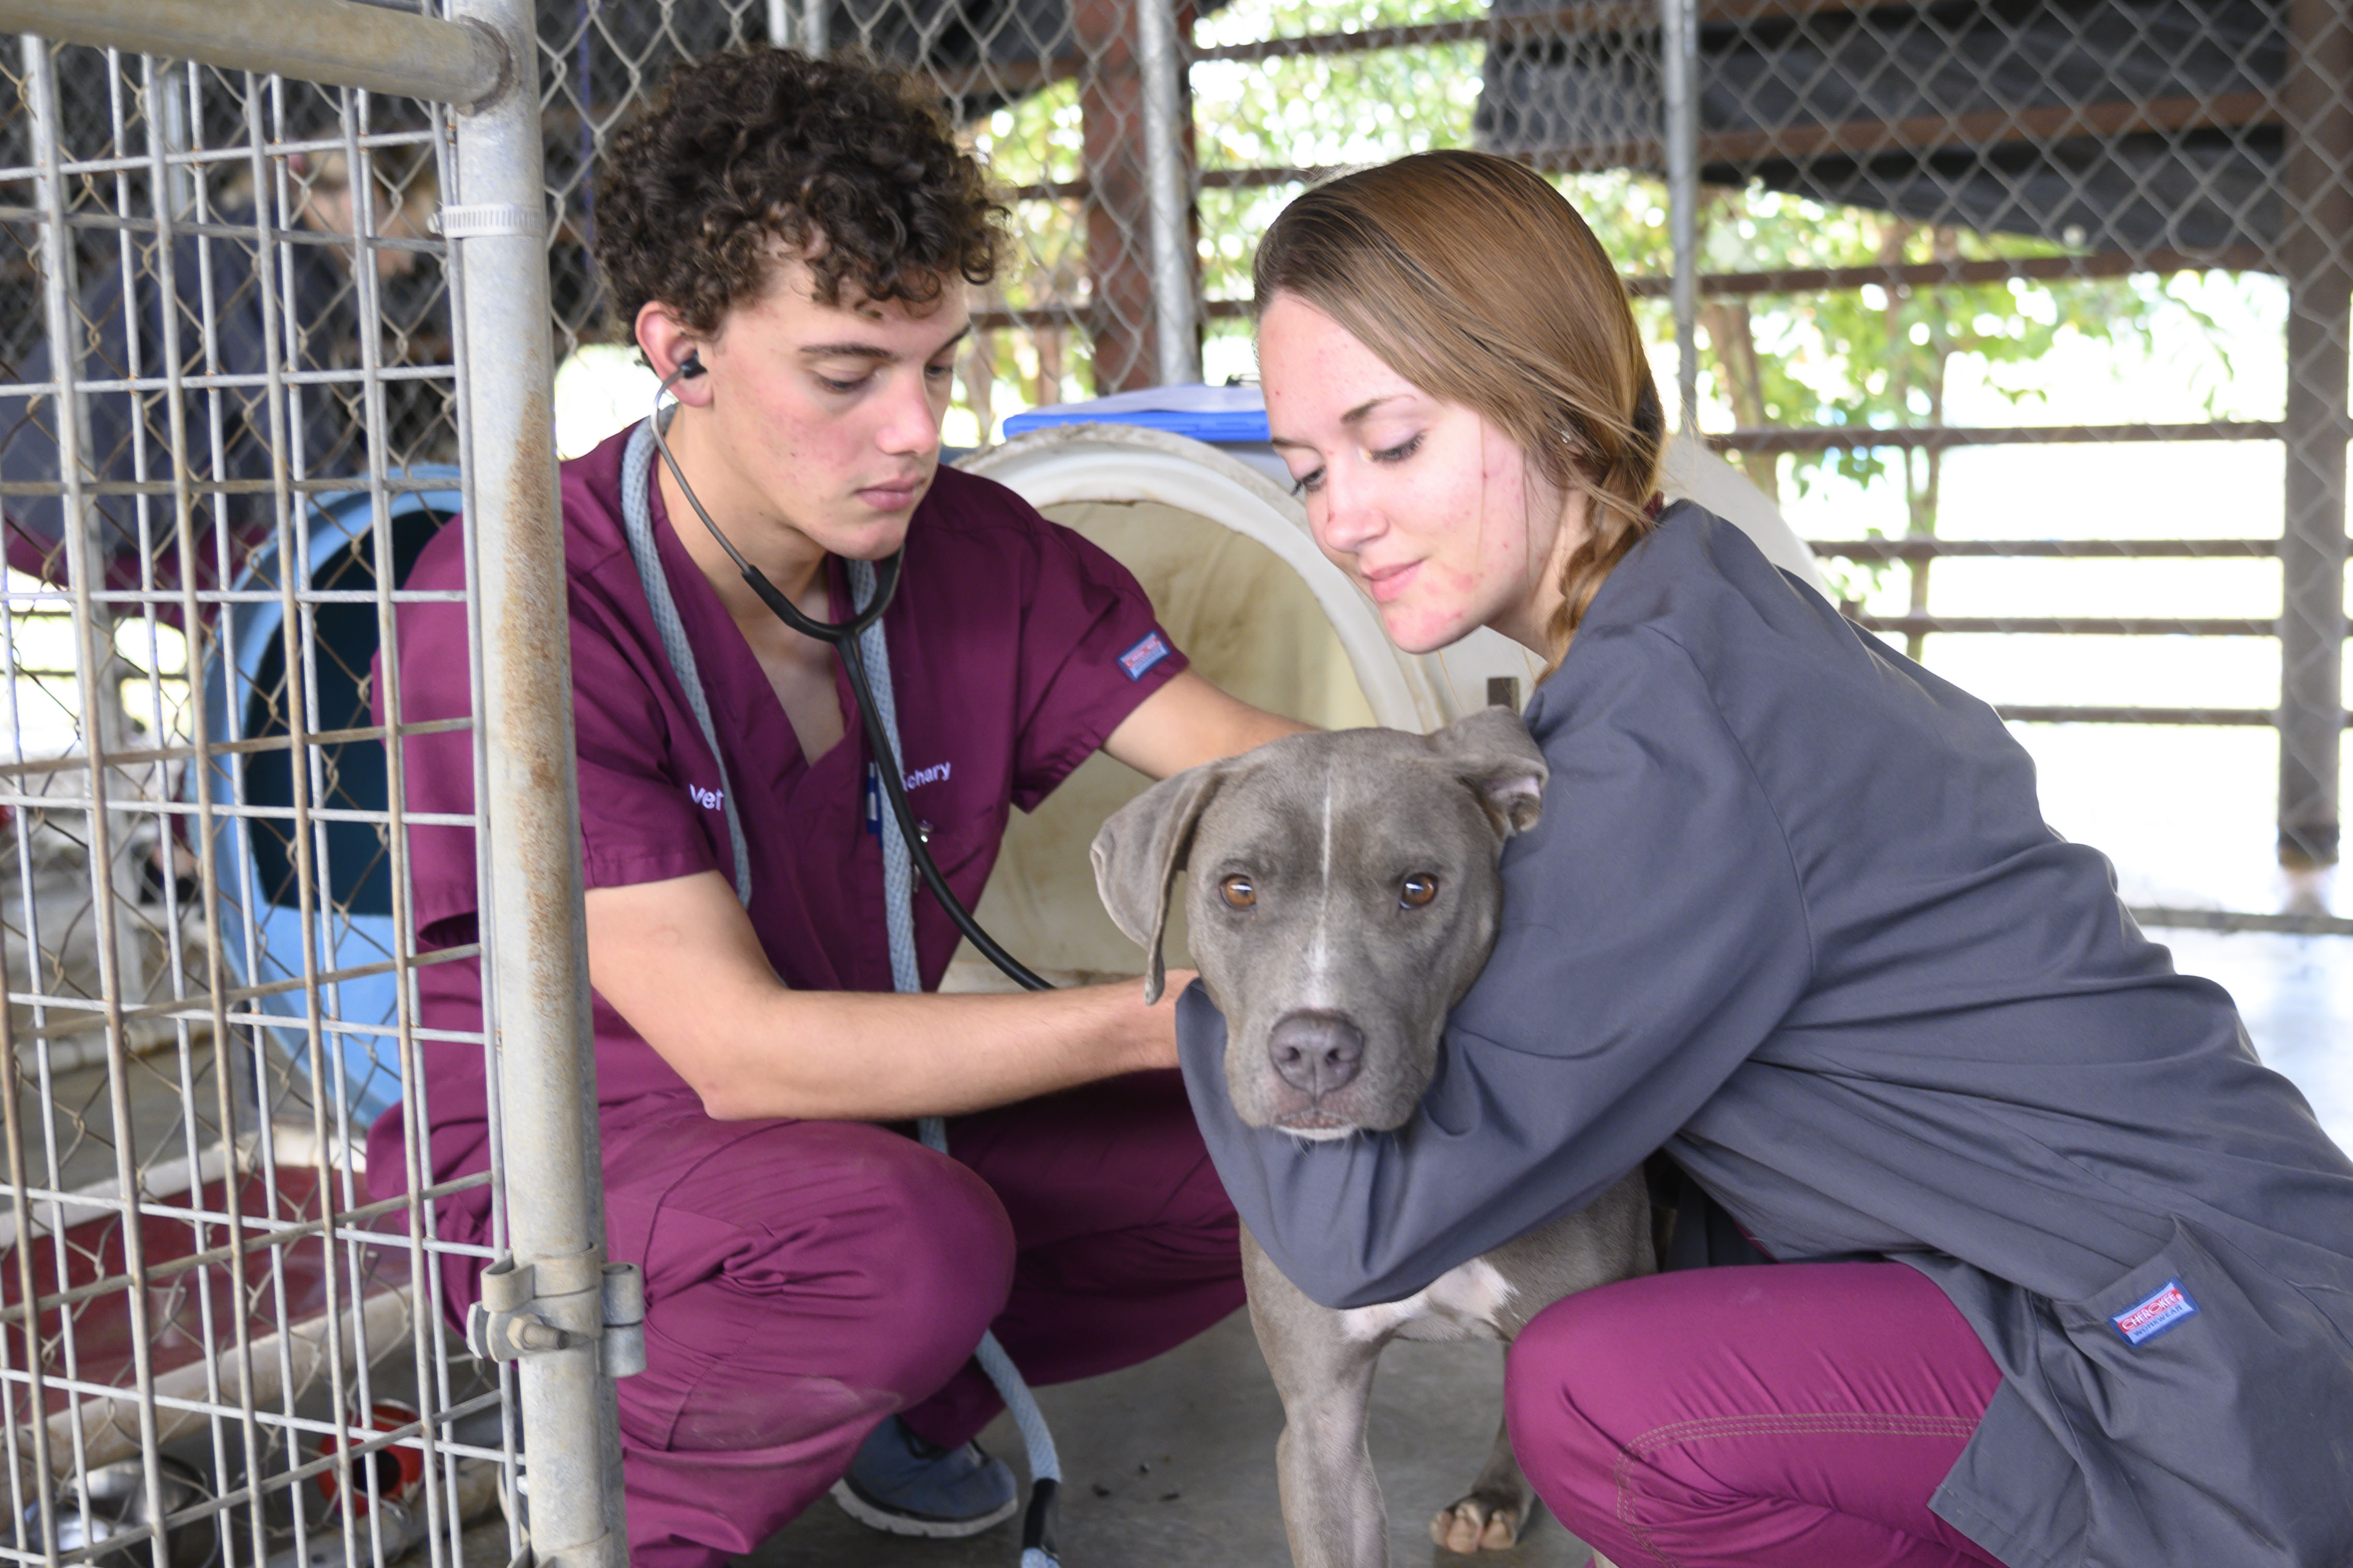 Students examine a shelter dog